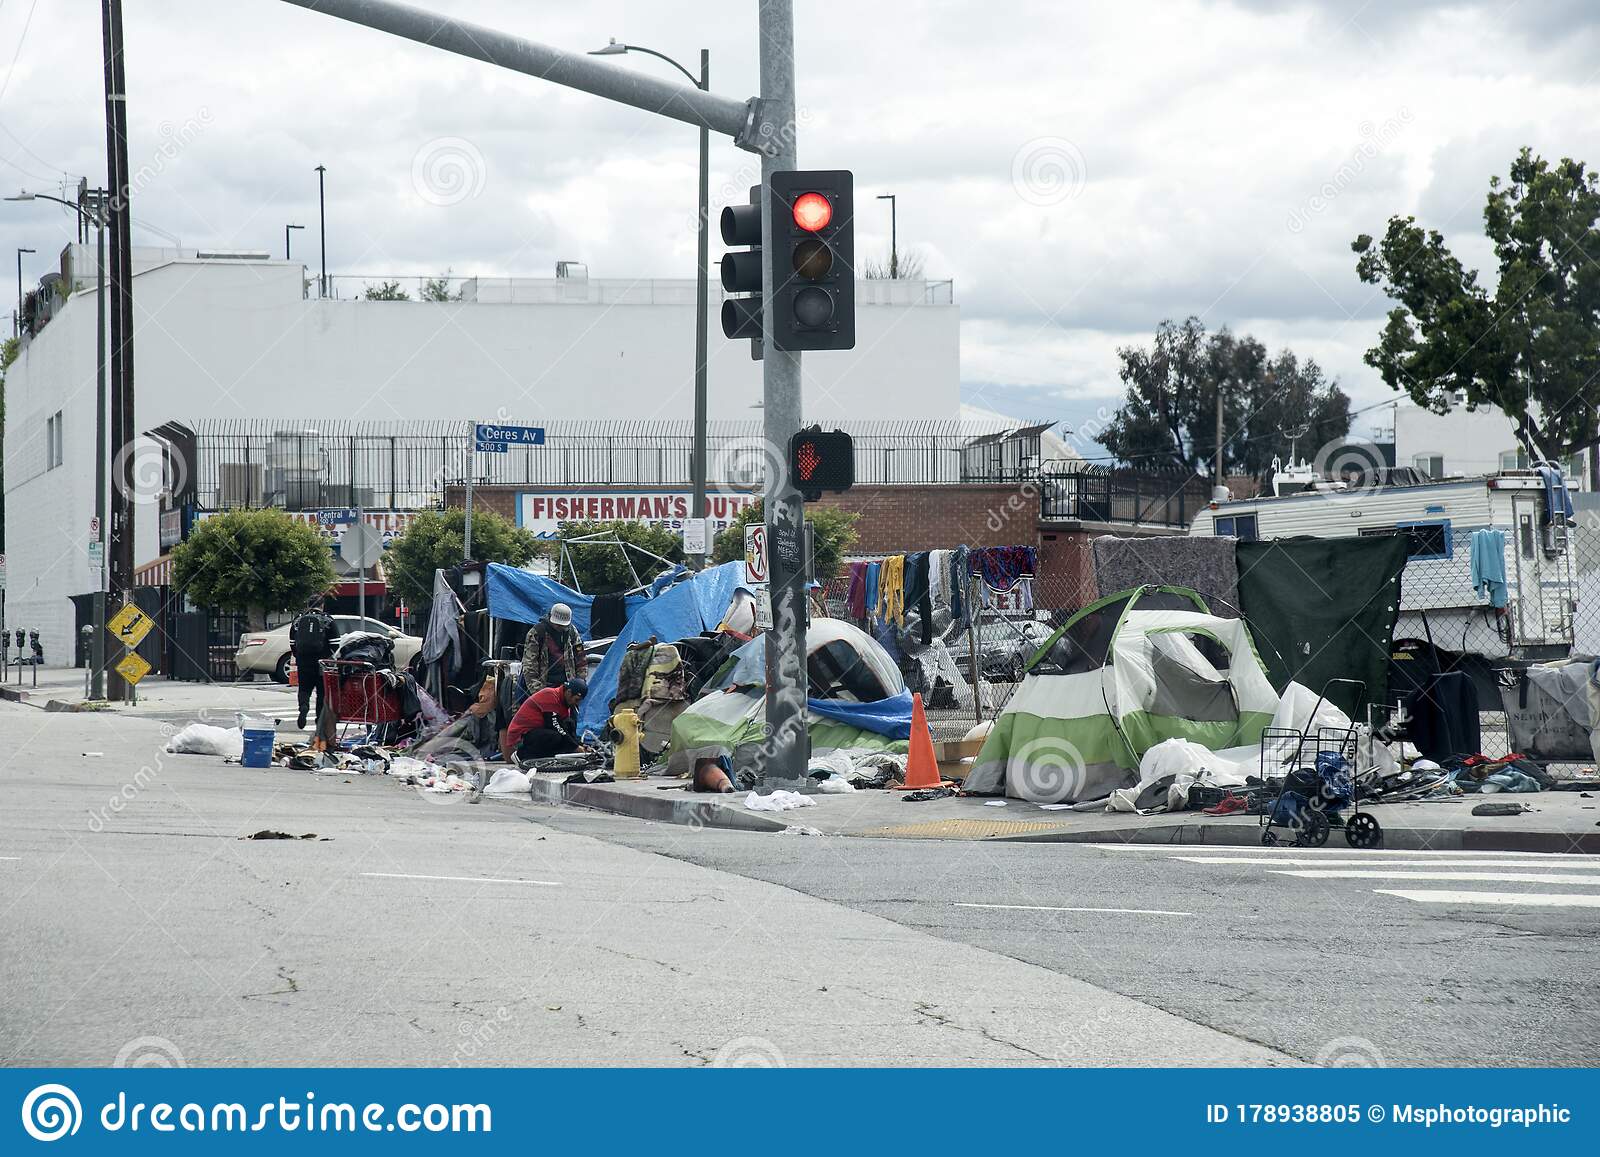 homeless-encampment-spreads-filth-disease-coronavirus-outbreak-downtown-la-la-homeless-178938805.jpg